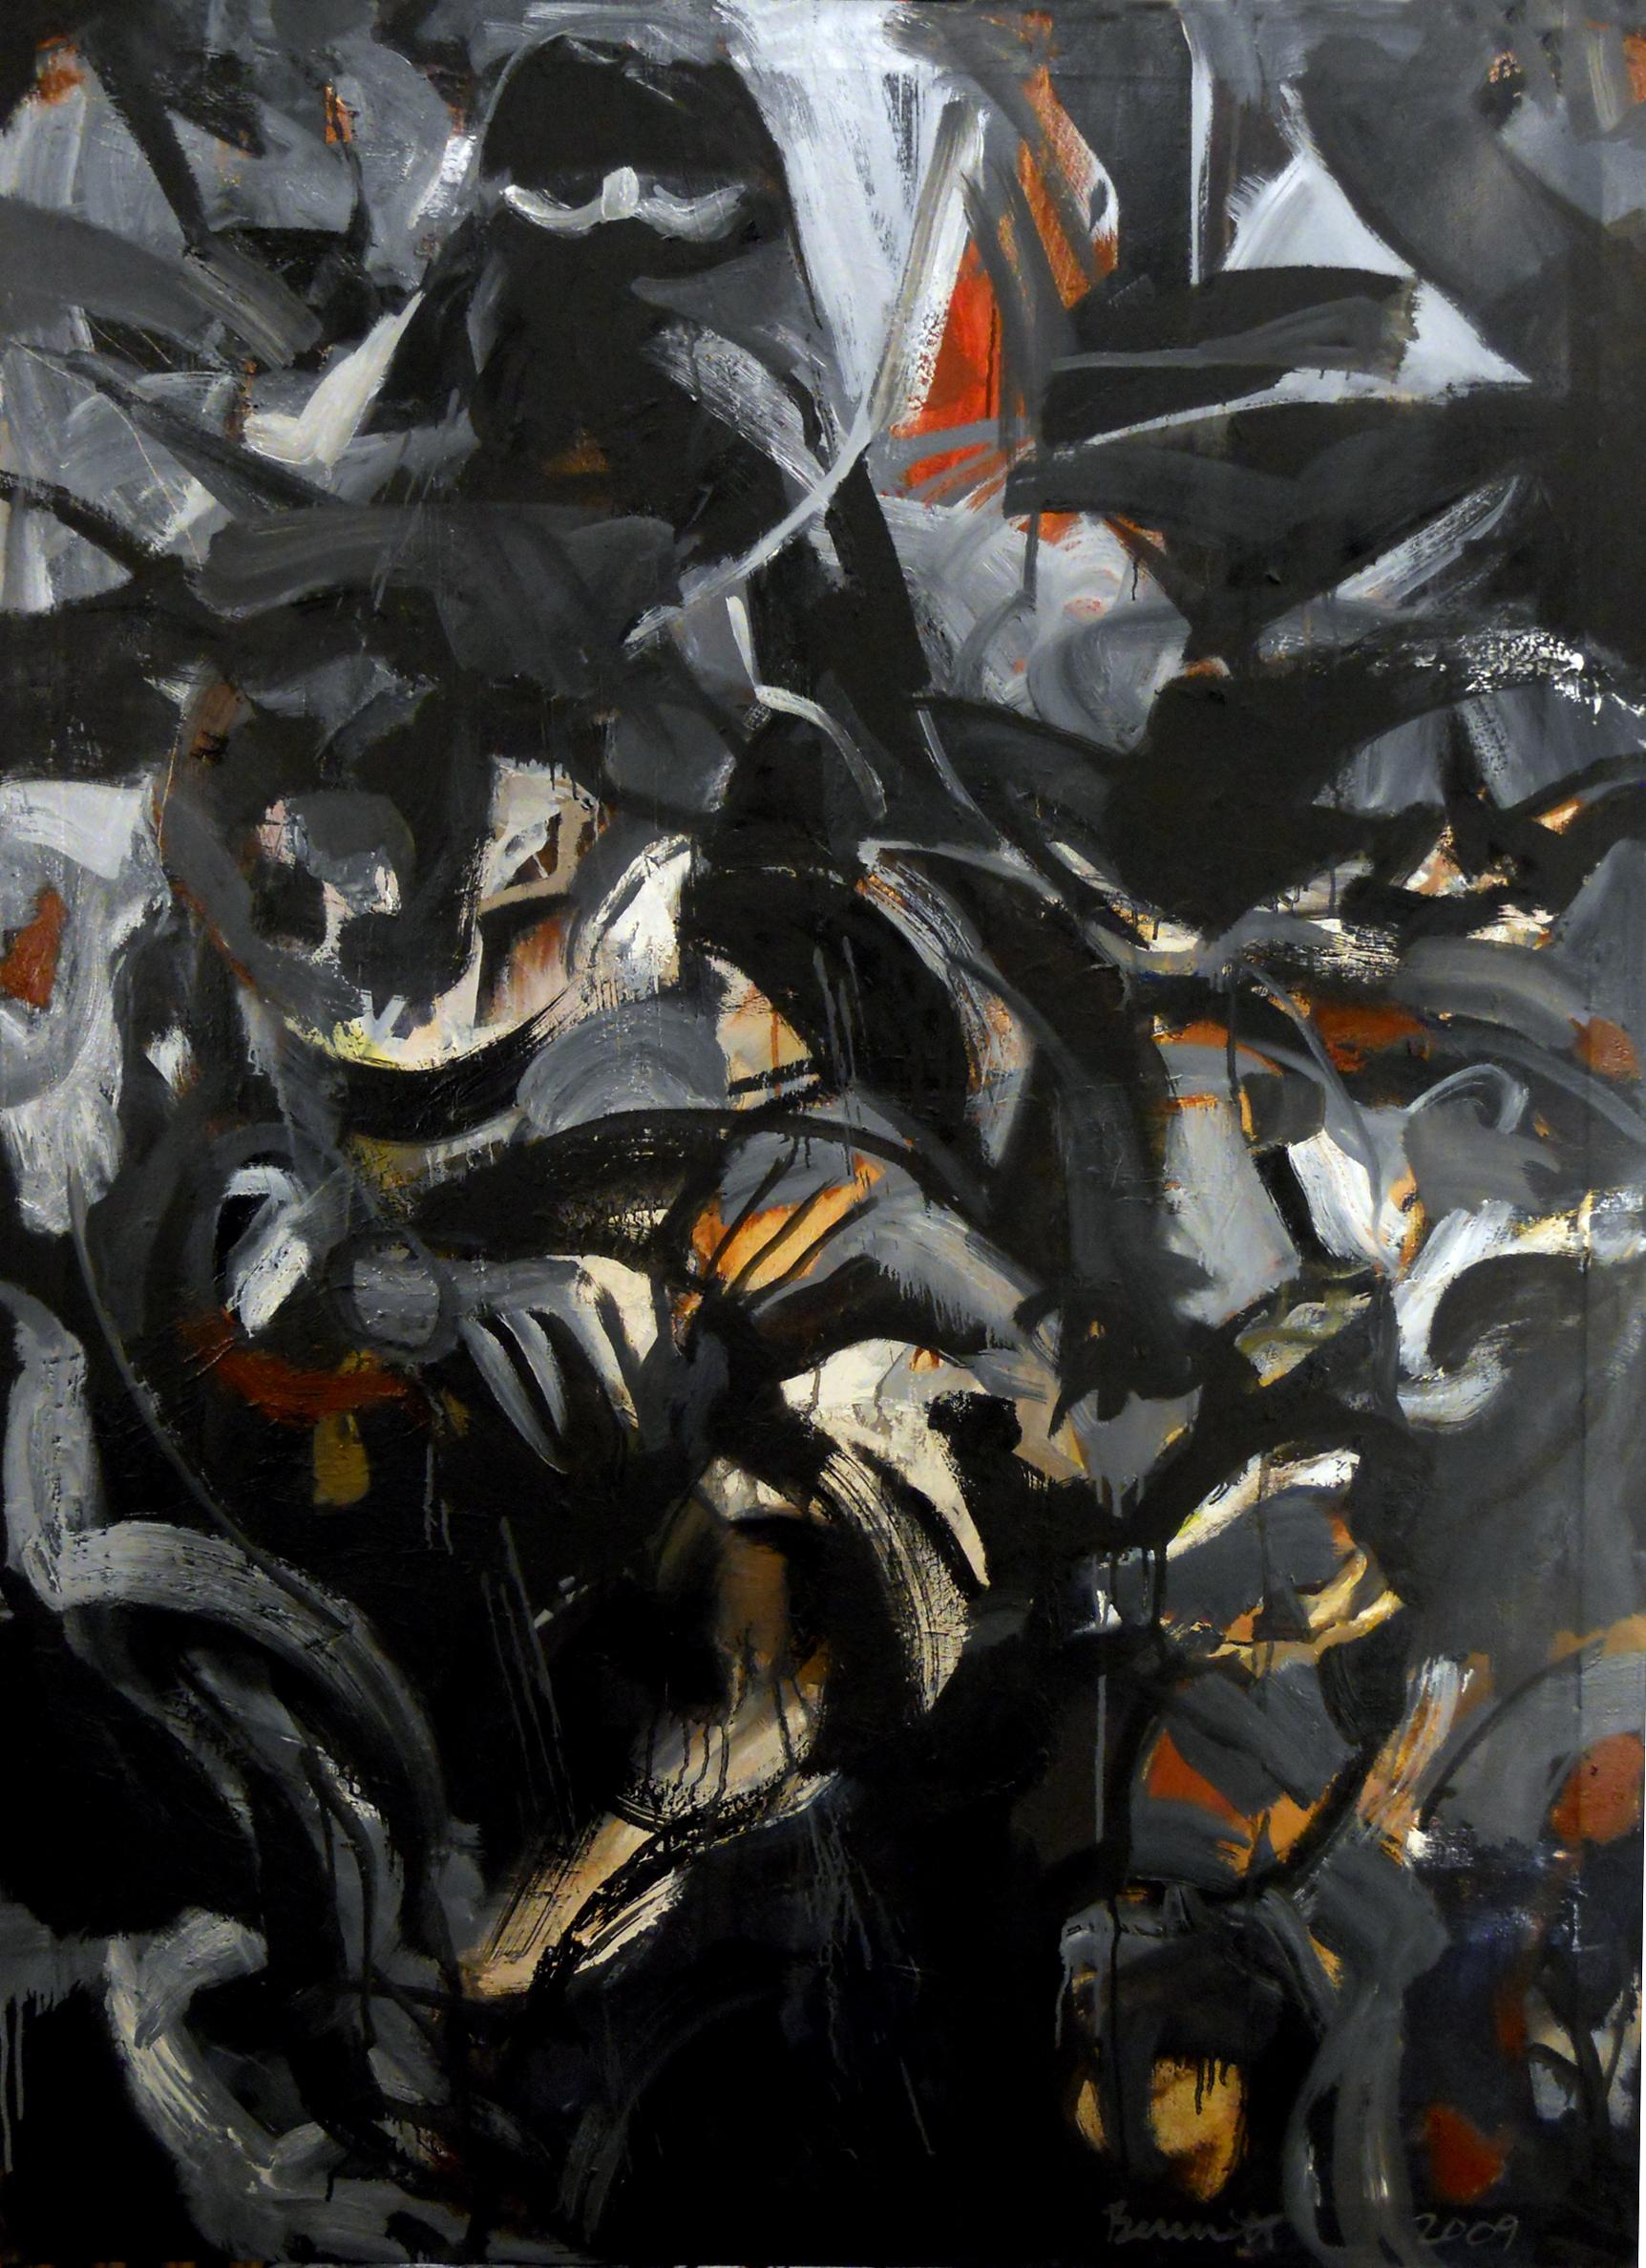 Purdah, dark tones, gestural abstract w figures, black, grey monochromatic